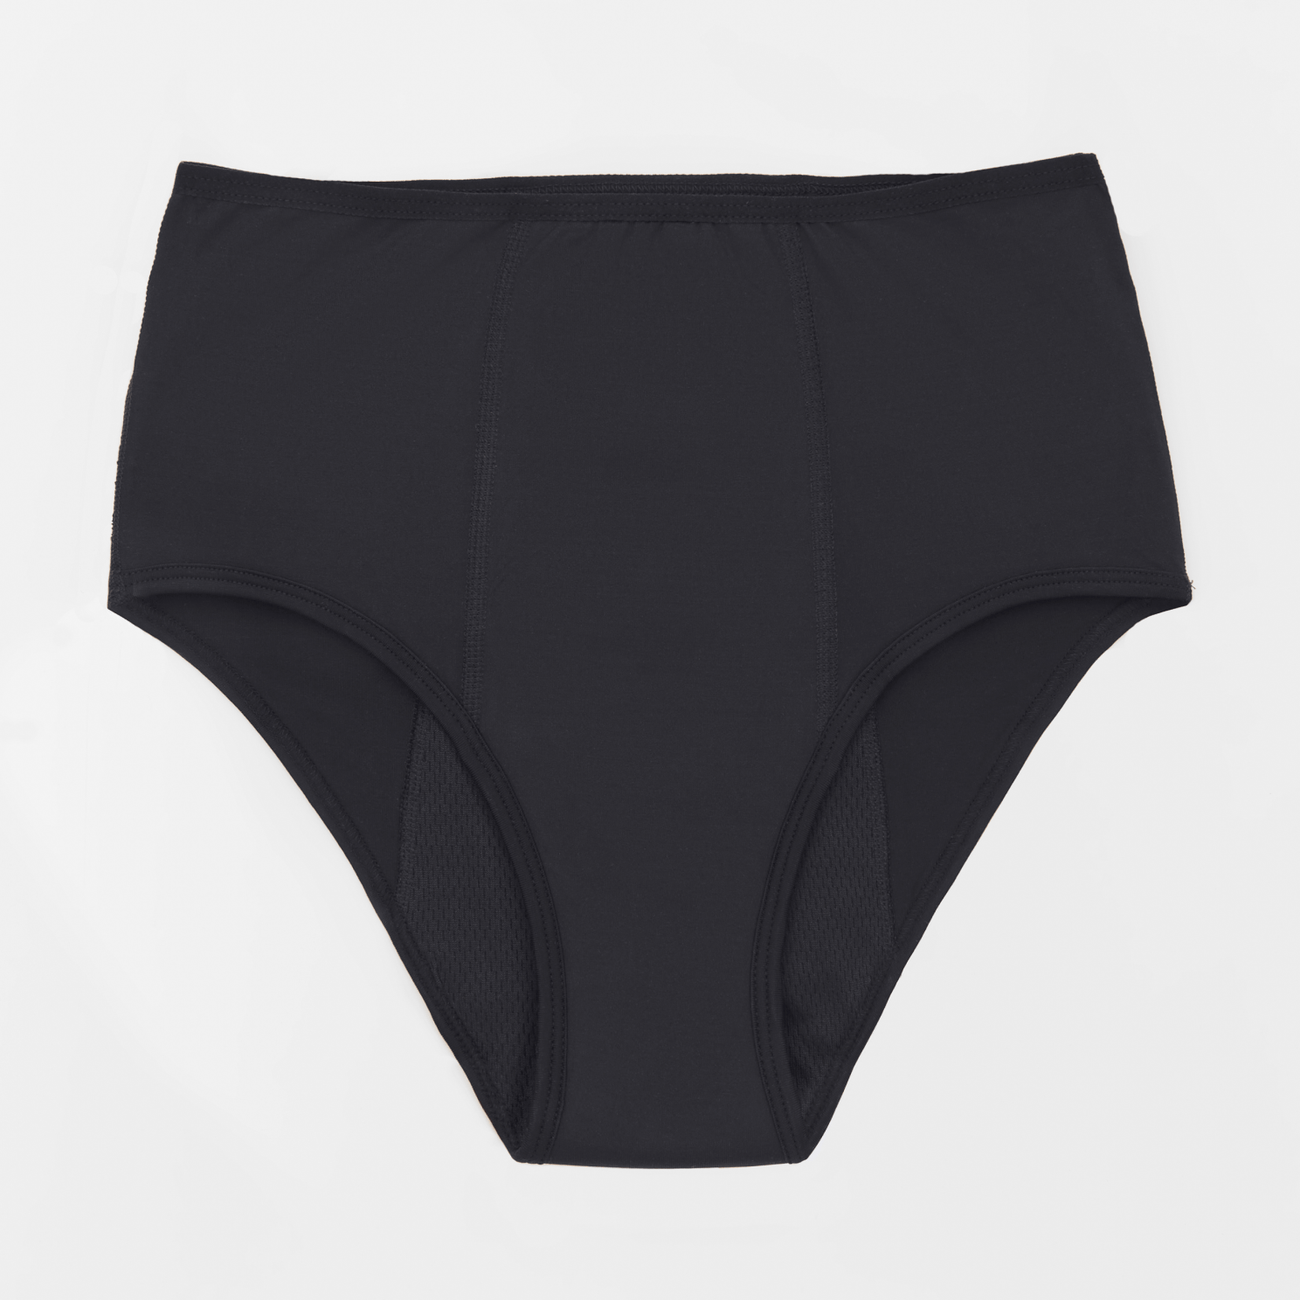 Snuggs period pants & underwear, #1 in Europe